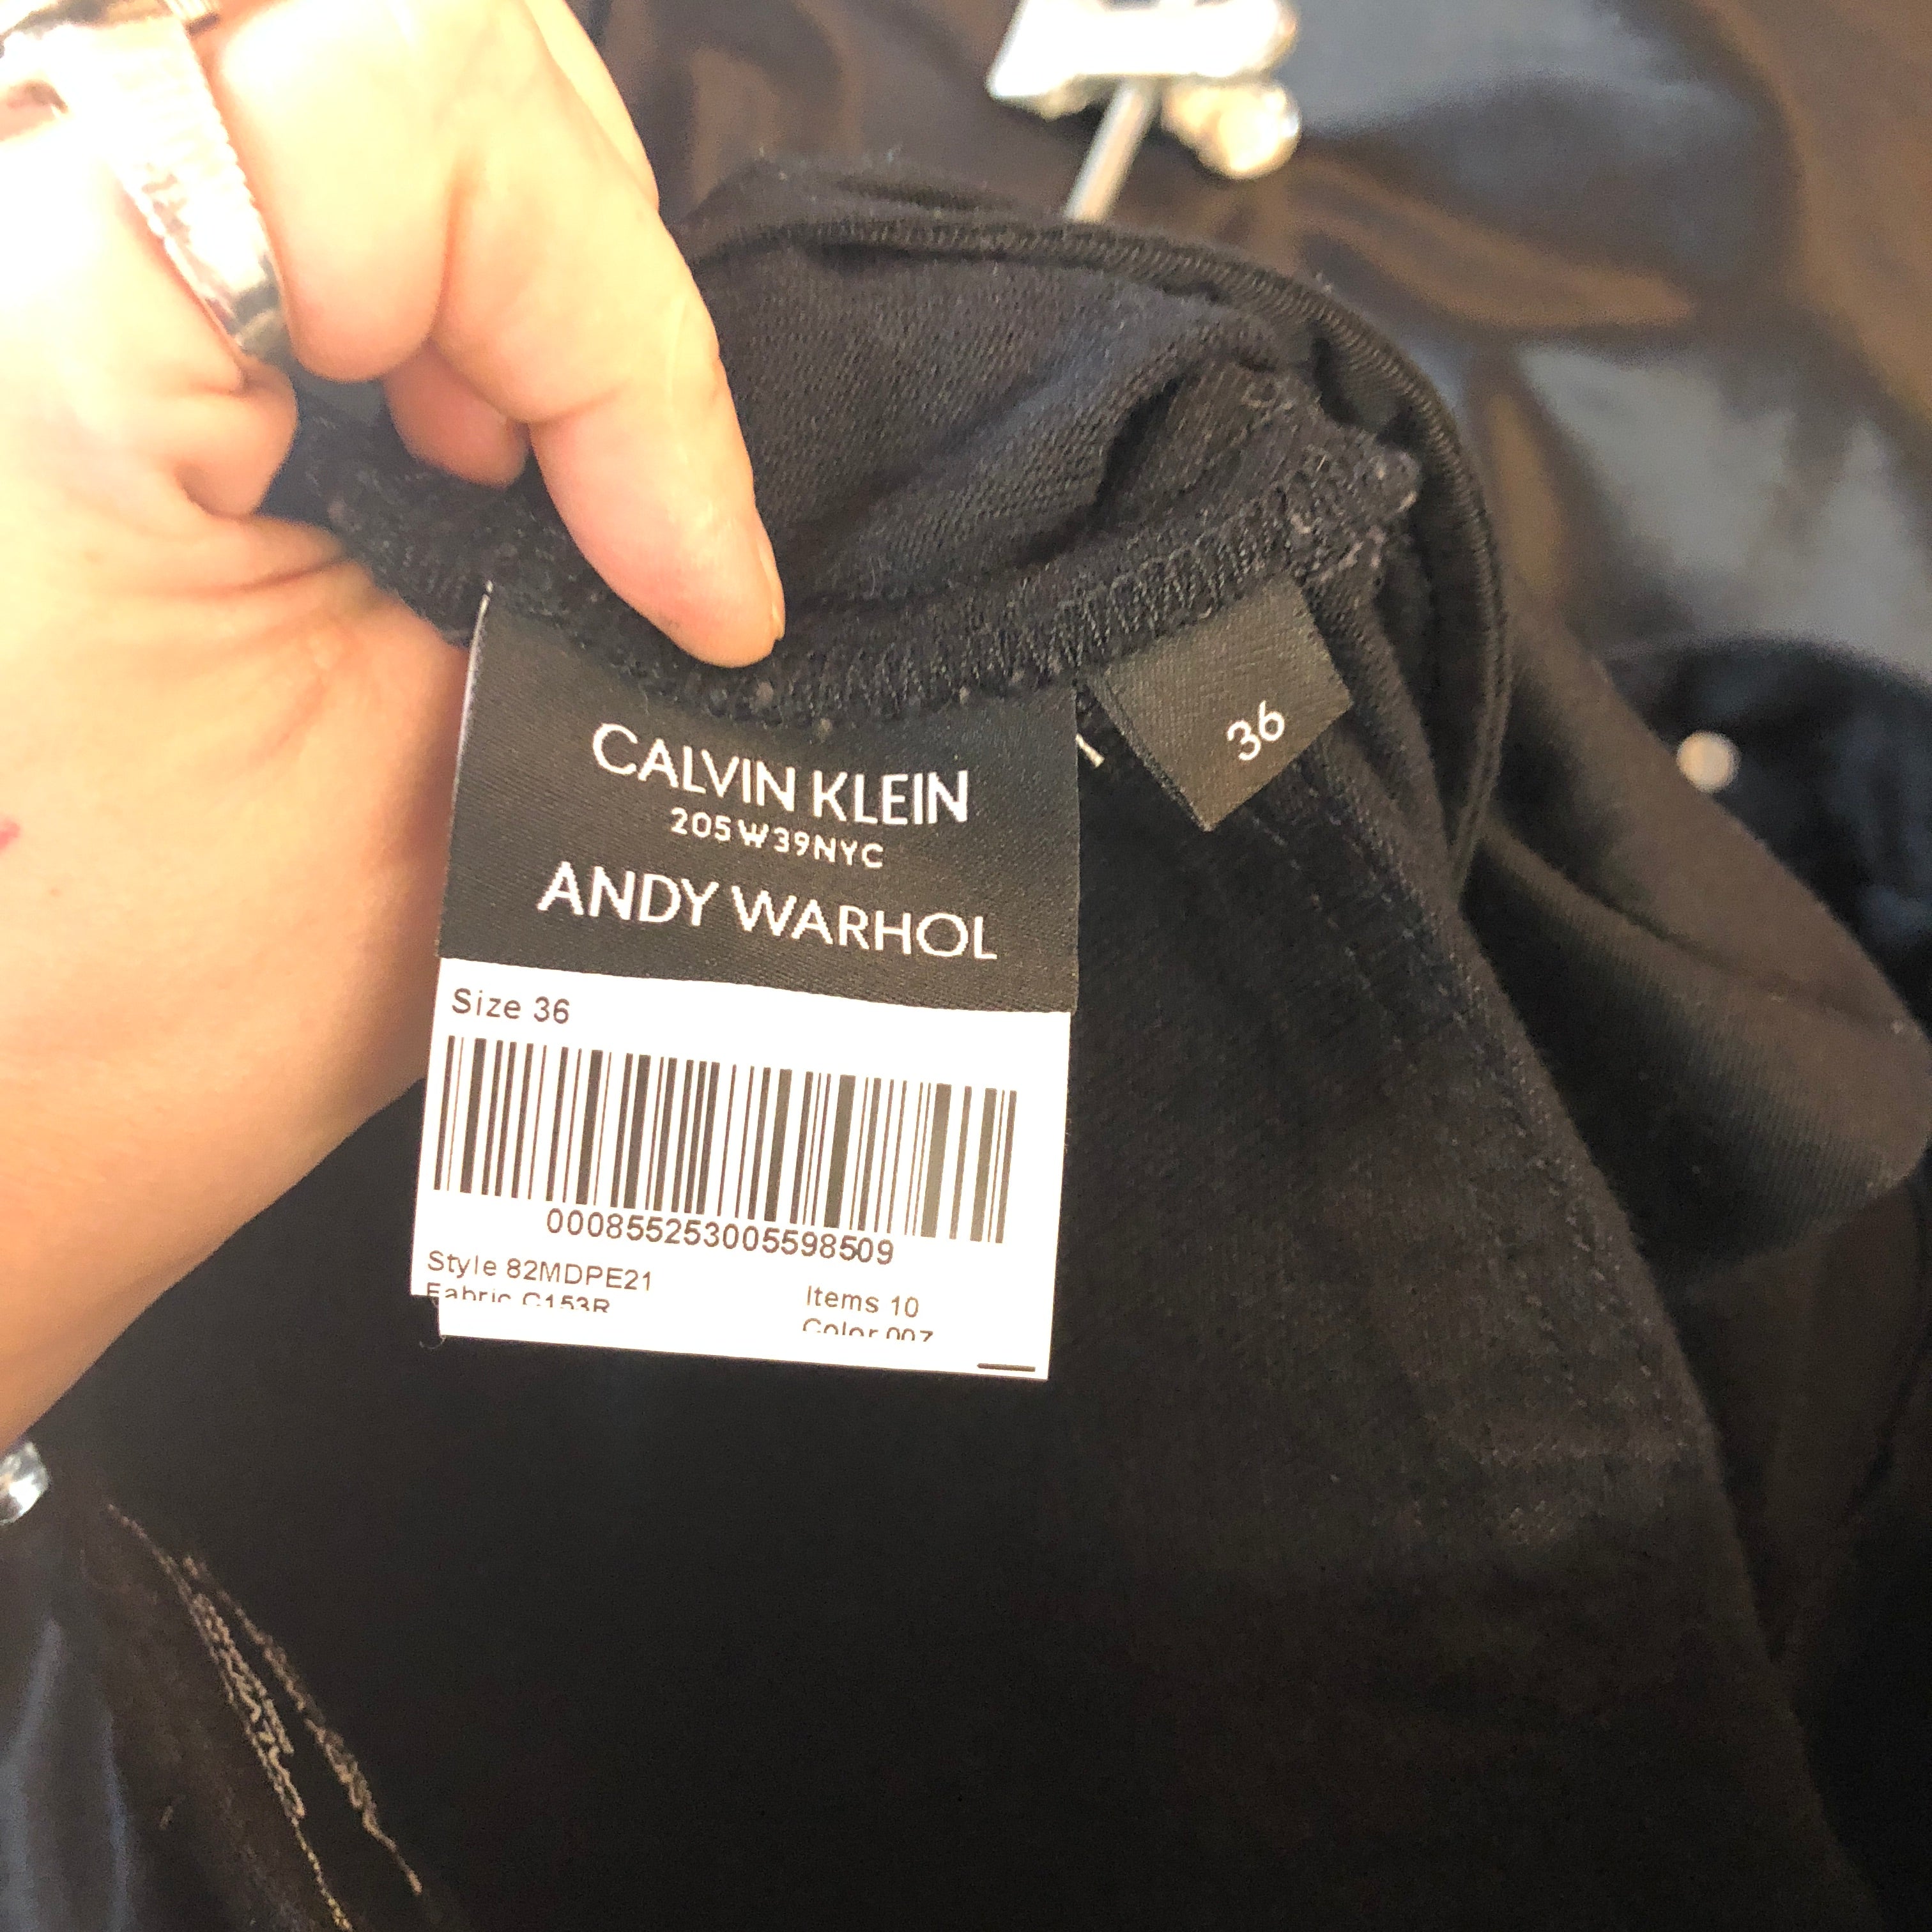 ANDY WARHOL X CALVIN KLEIN jeans